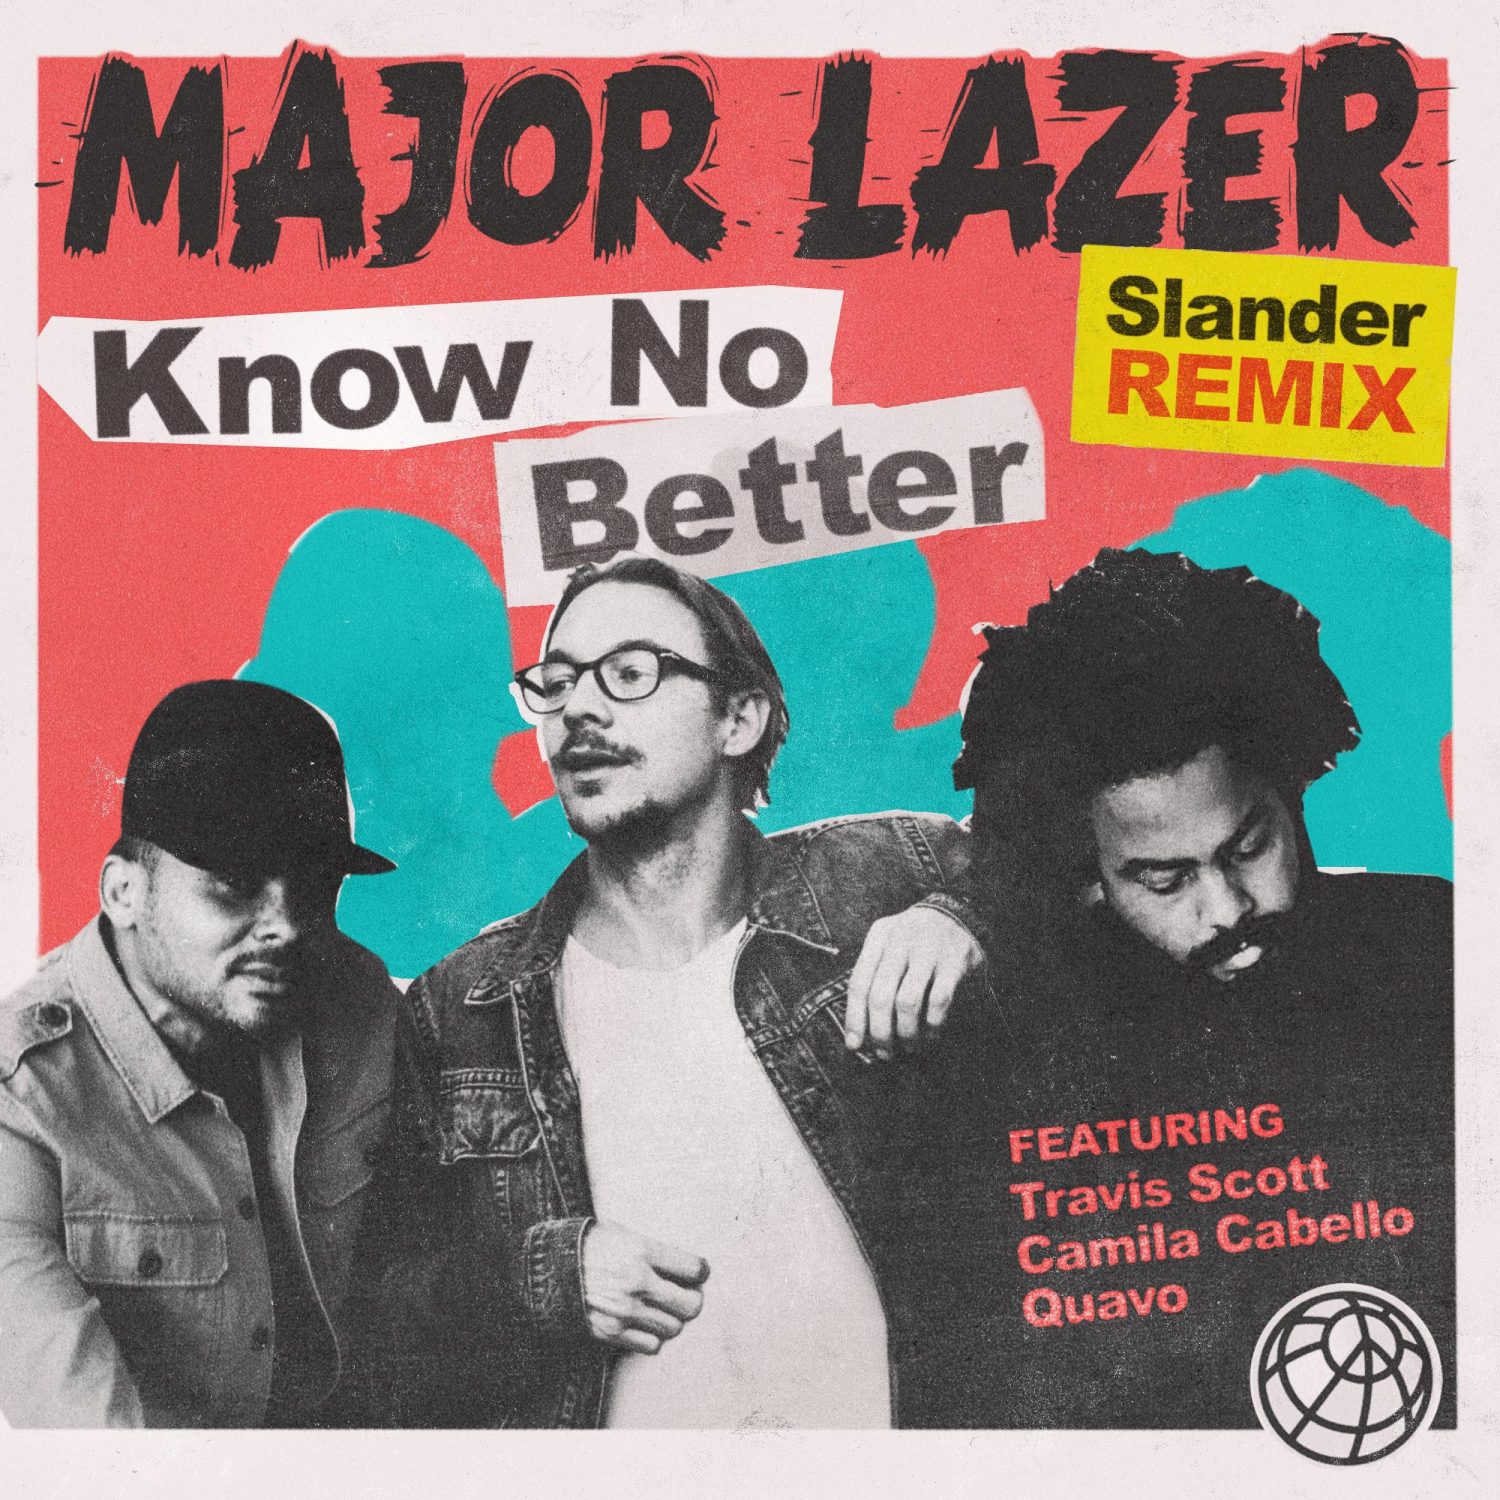 Major Lazer Know No Better SLANDER Remix